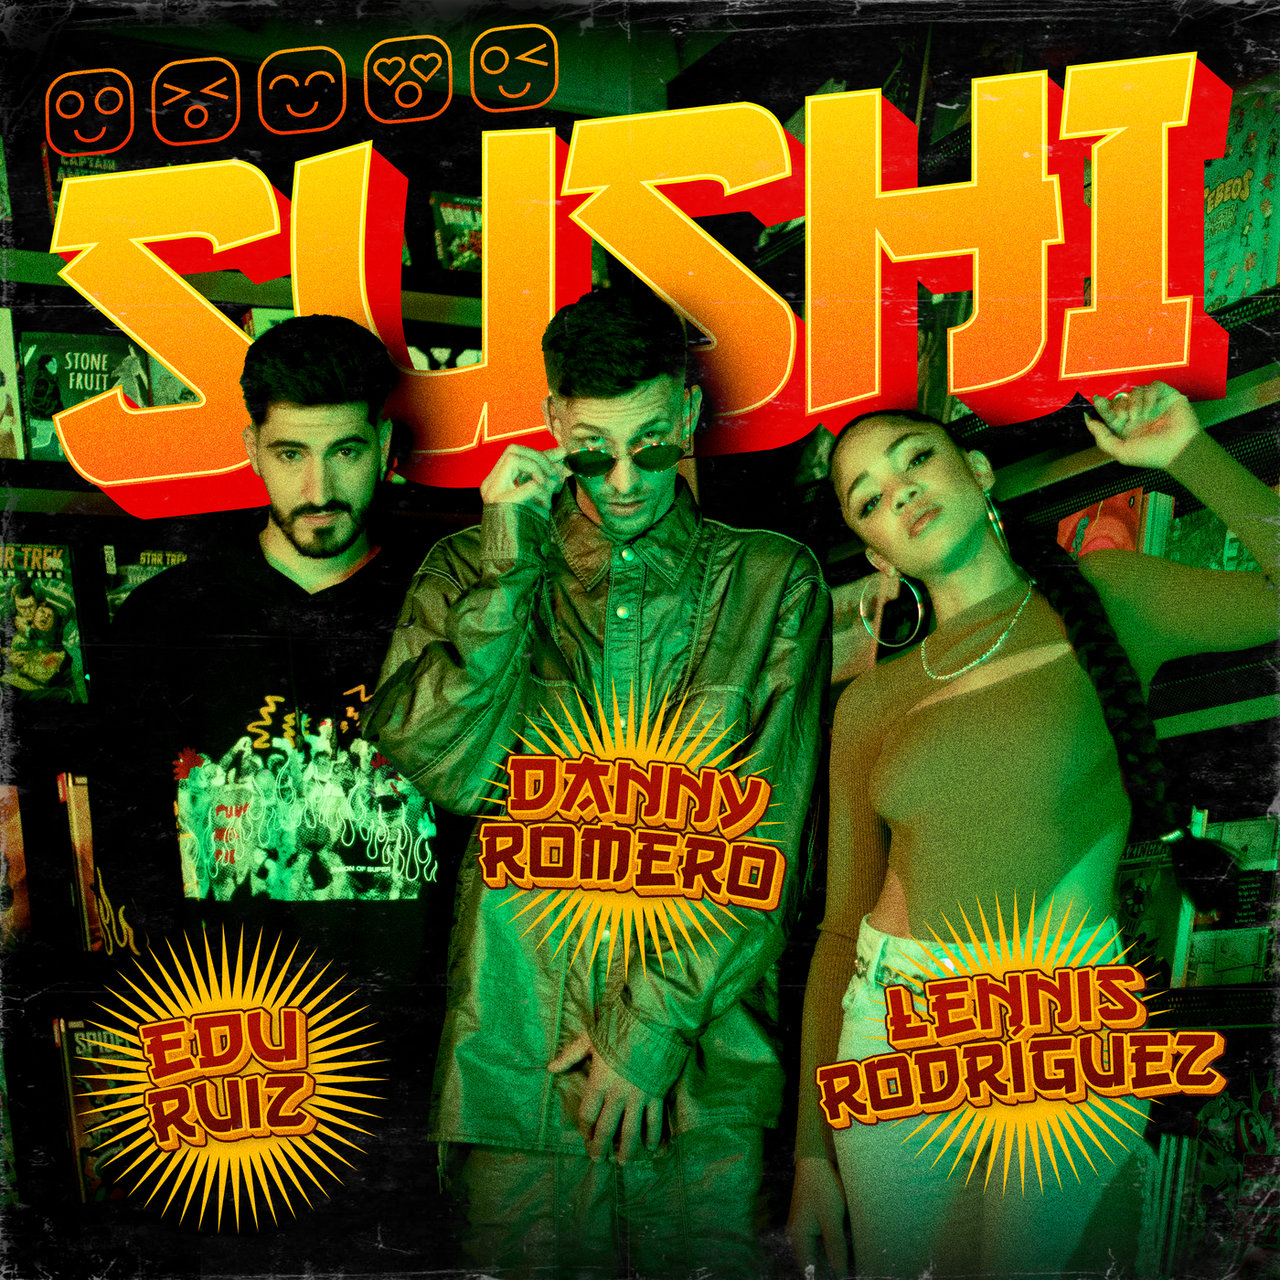 Danny Romero, Lennis Rodriguez, & Edu Ruiz Sushi cover artwork